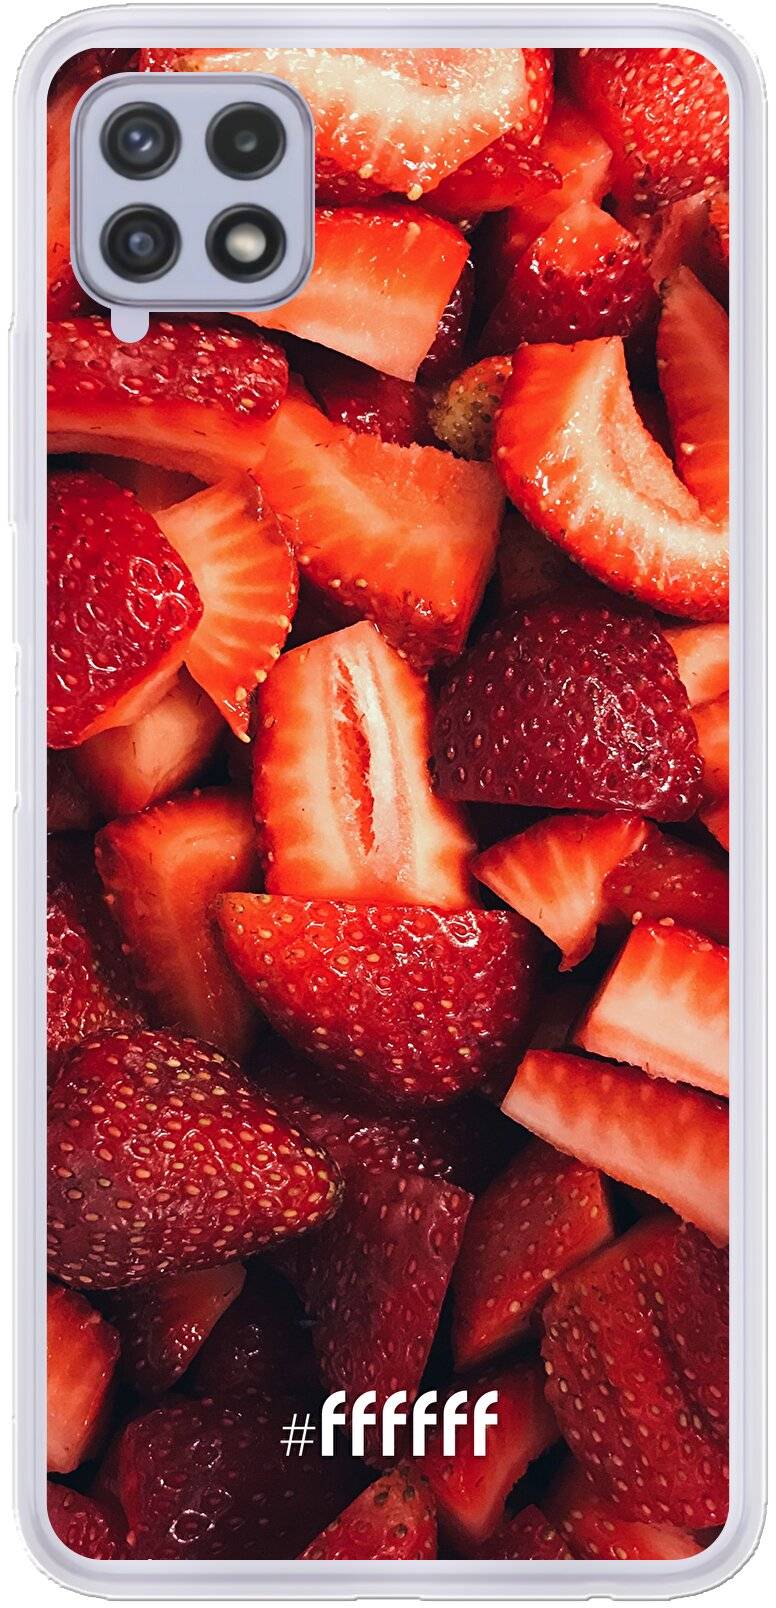 Strawberry Fields Galaxy A22 4G